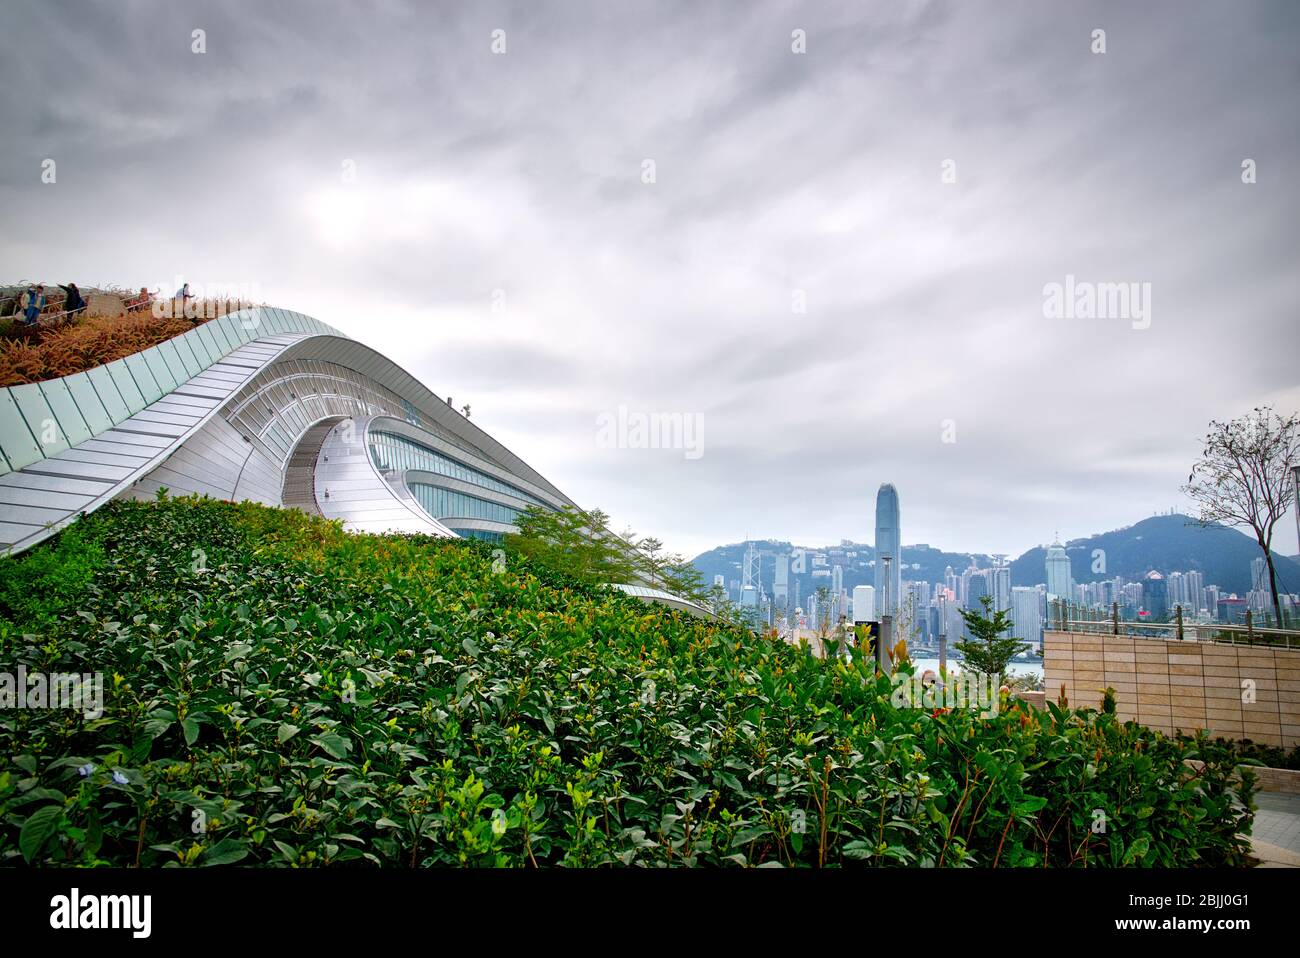 West Kowloon, Hong Kong / Cina - 12-24-2018: Architettura (esterno) - Hong Kong - Stazione ferroviaria di West Kowloon Foto Stock